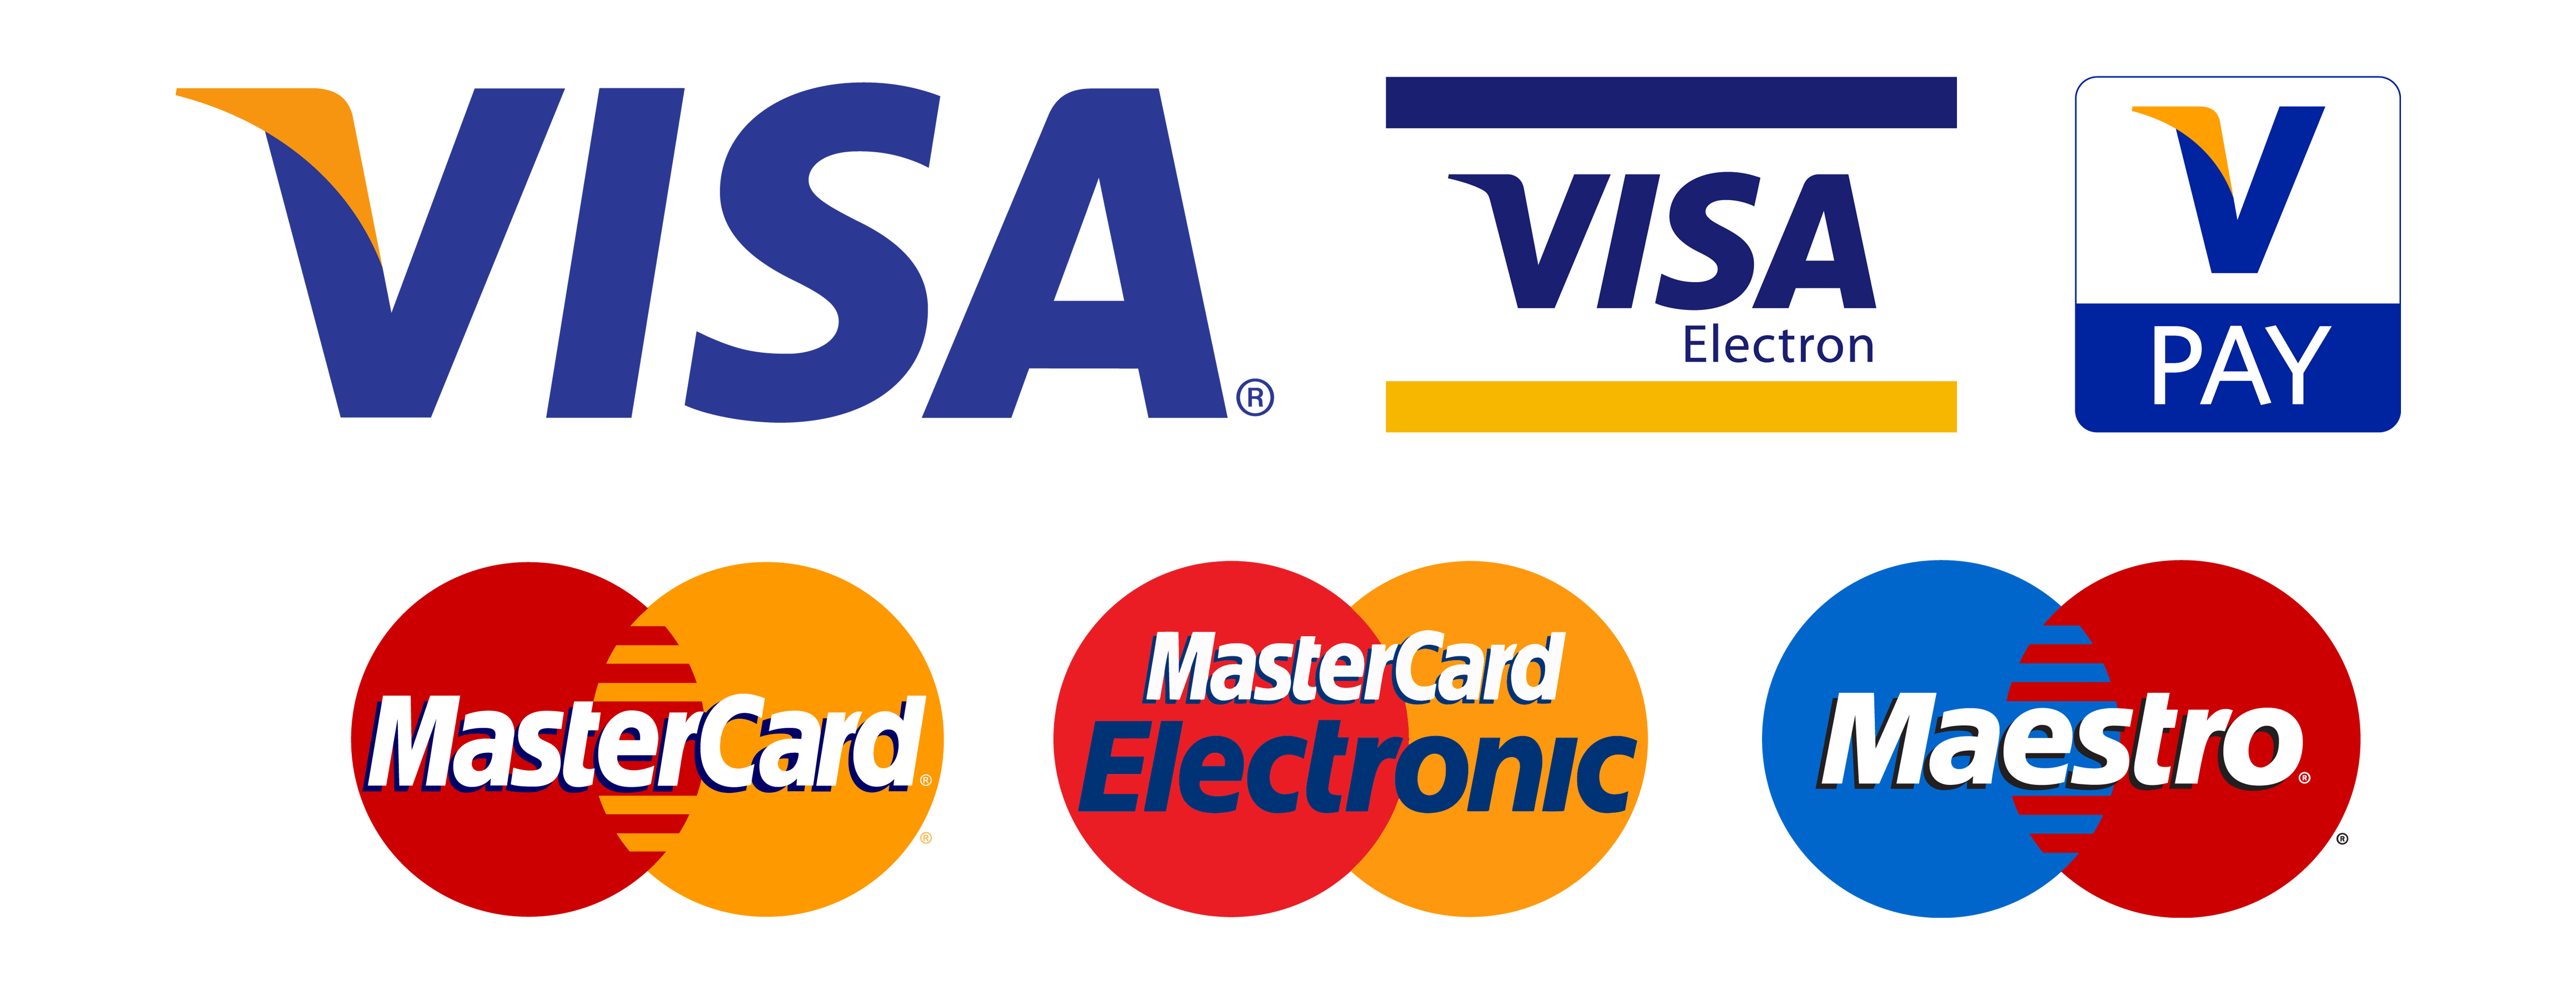 Visa these. Виза виза электрон. Логотип visa Electron. Карта виза электрон. Виза и Мастеркард.